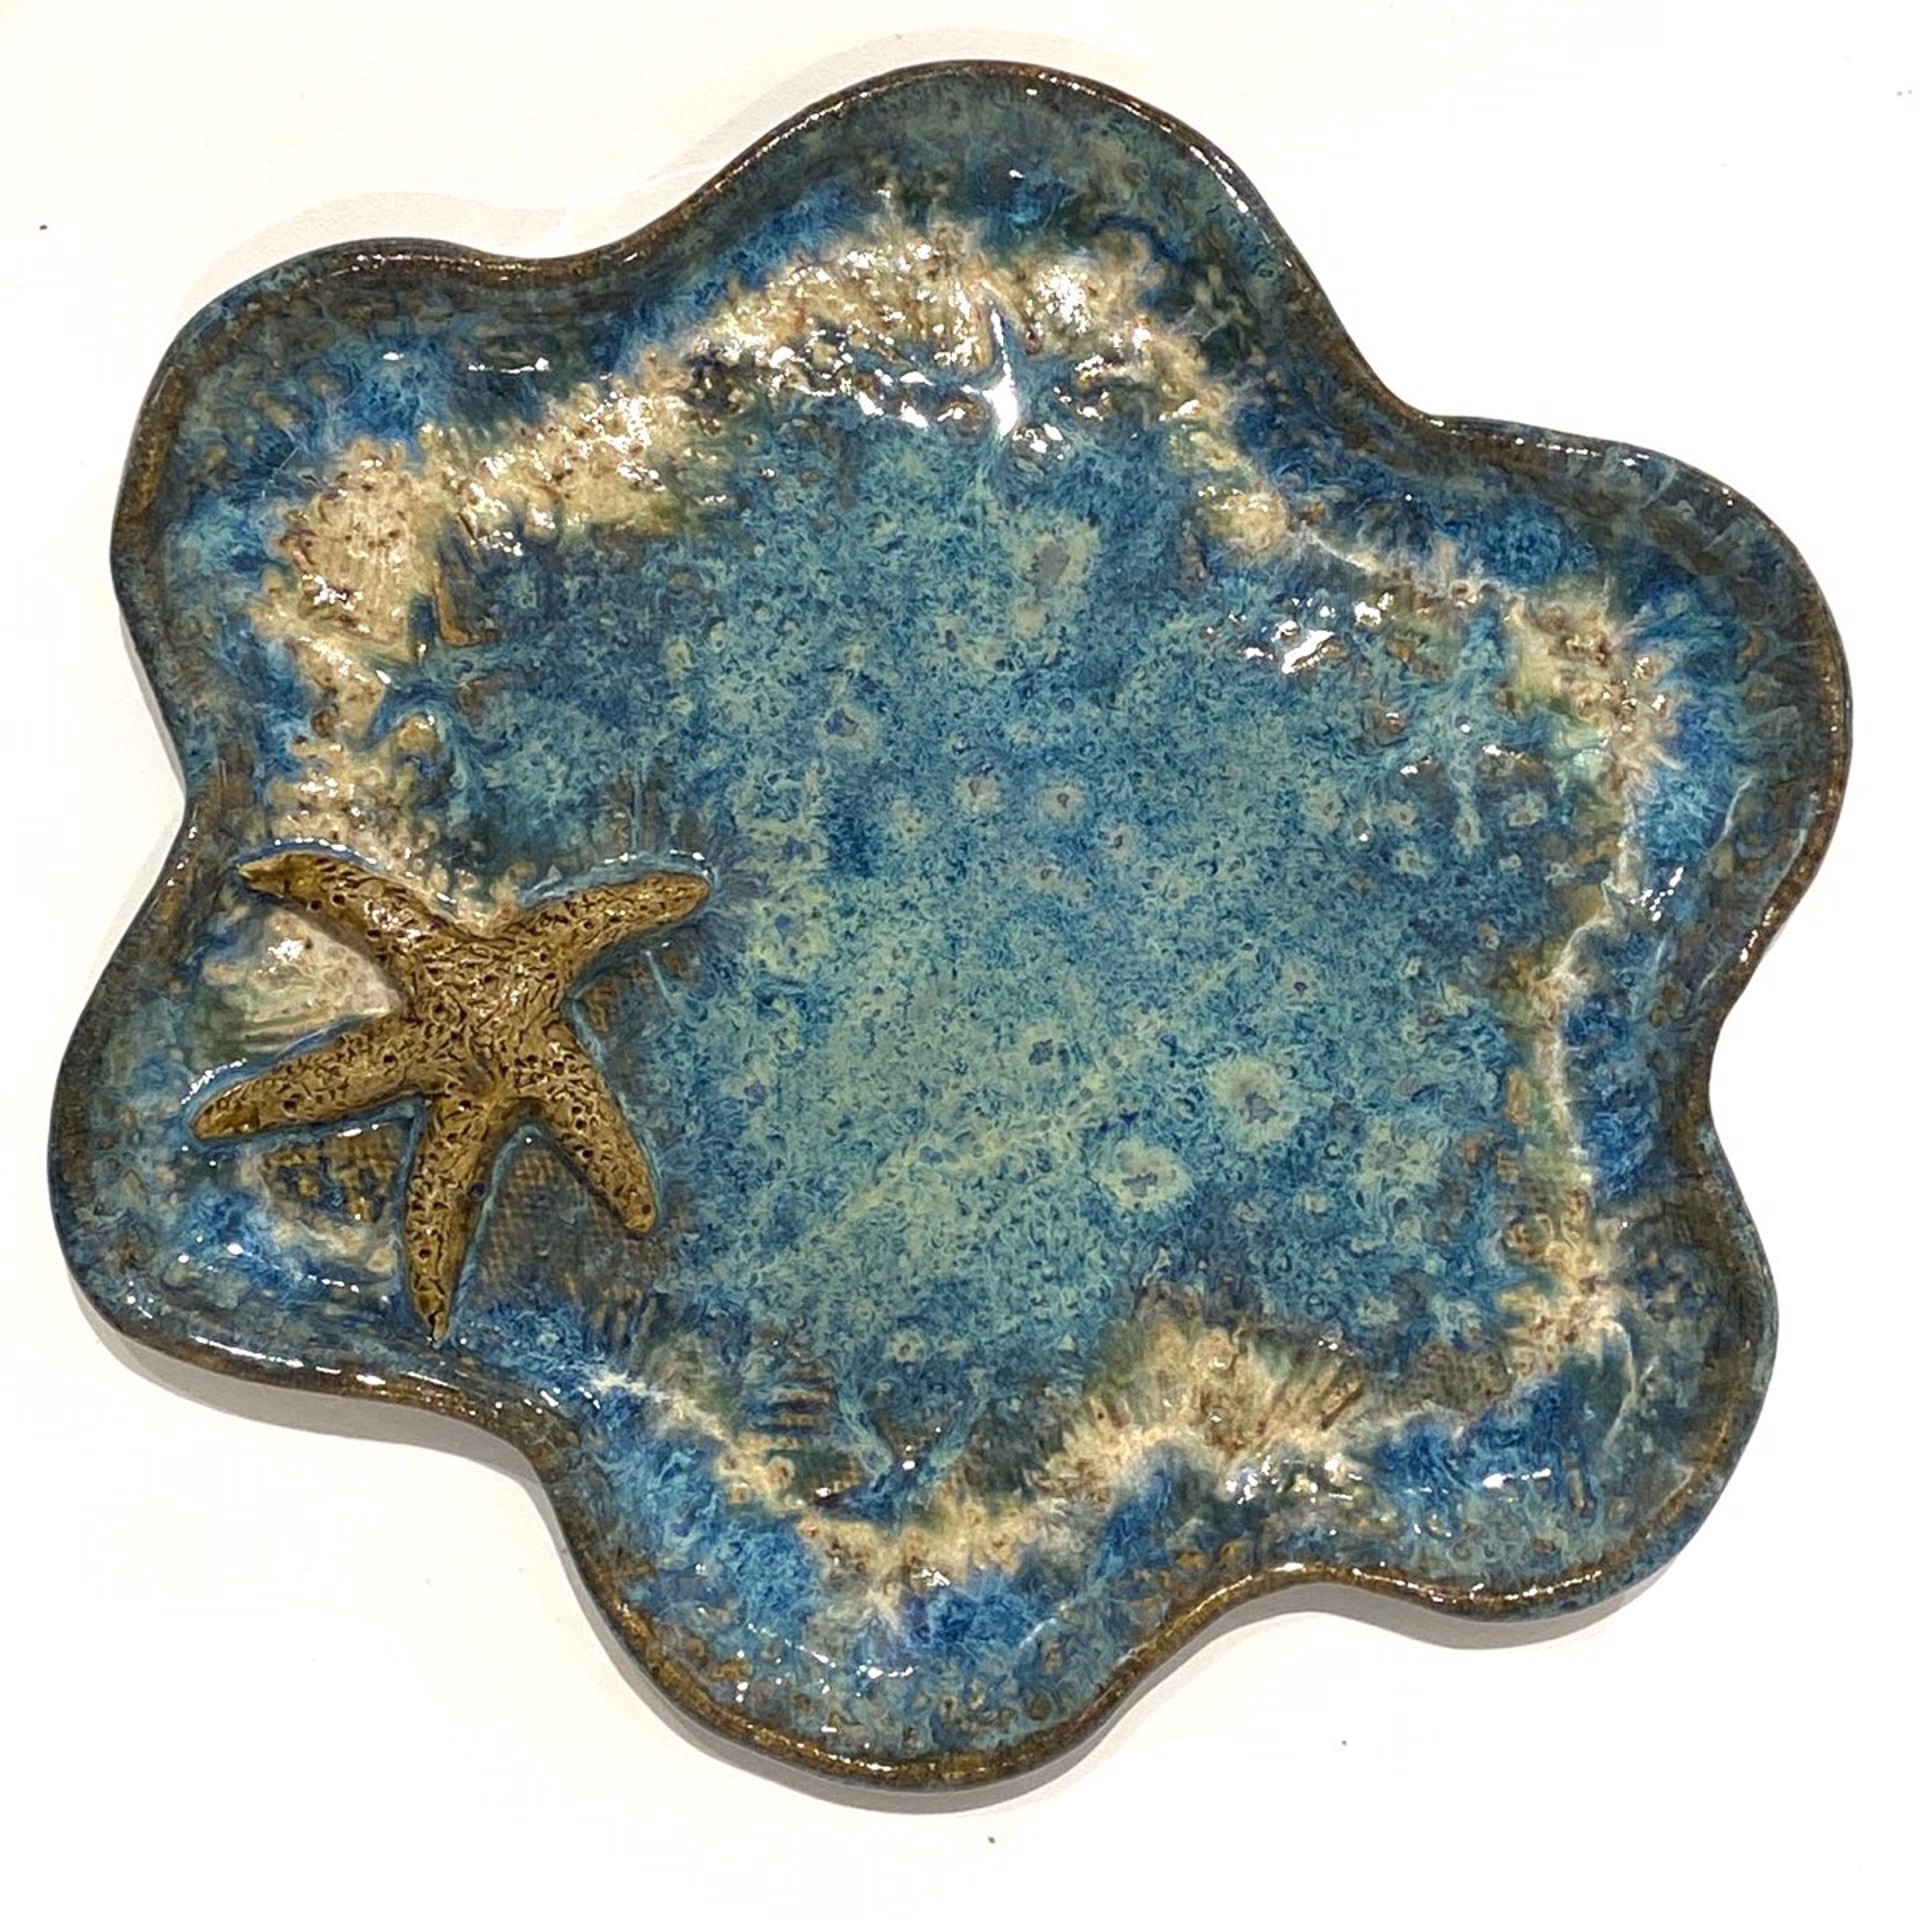 LG23-972 Plate with One Starfish (Blue Glaze) by Jim & Steffi Logan